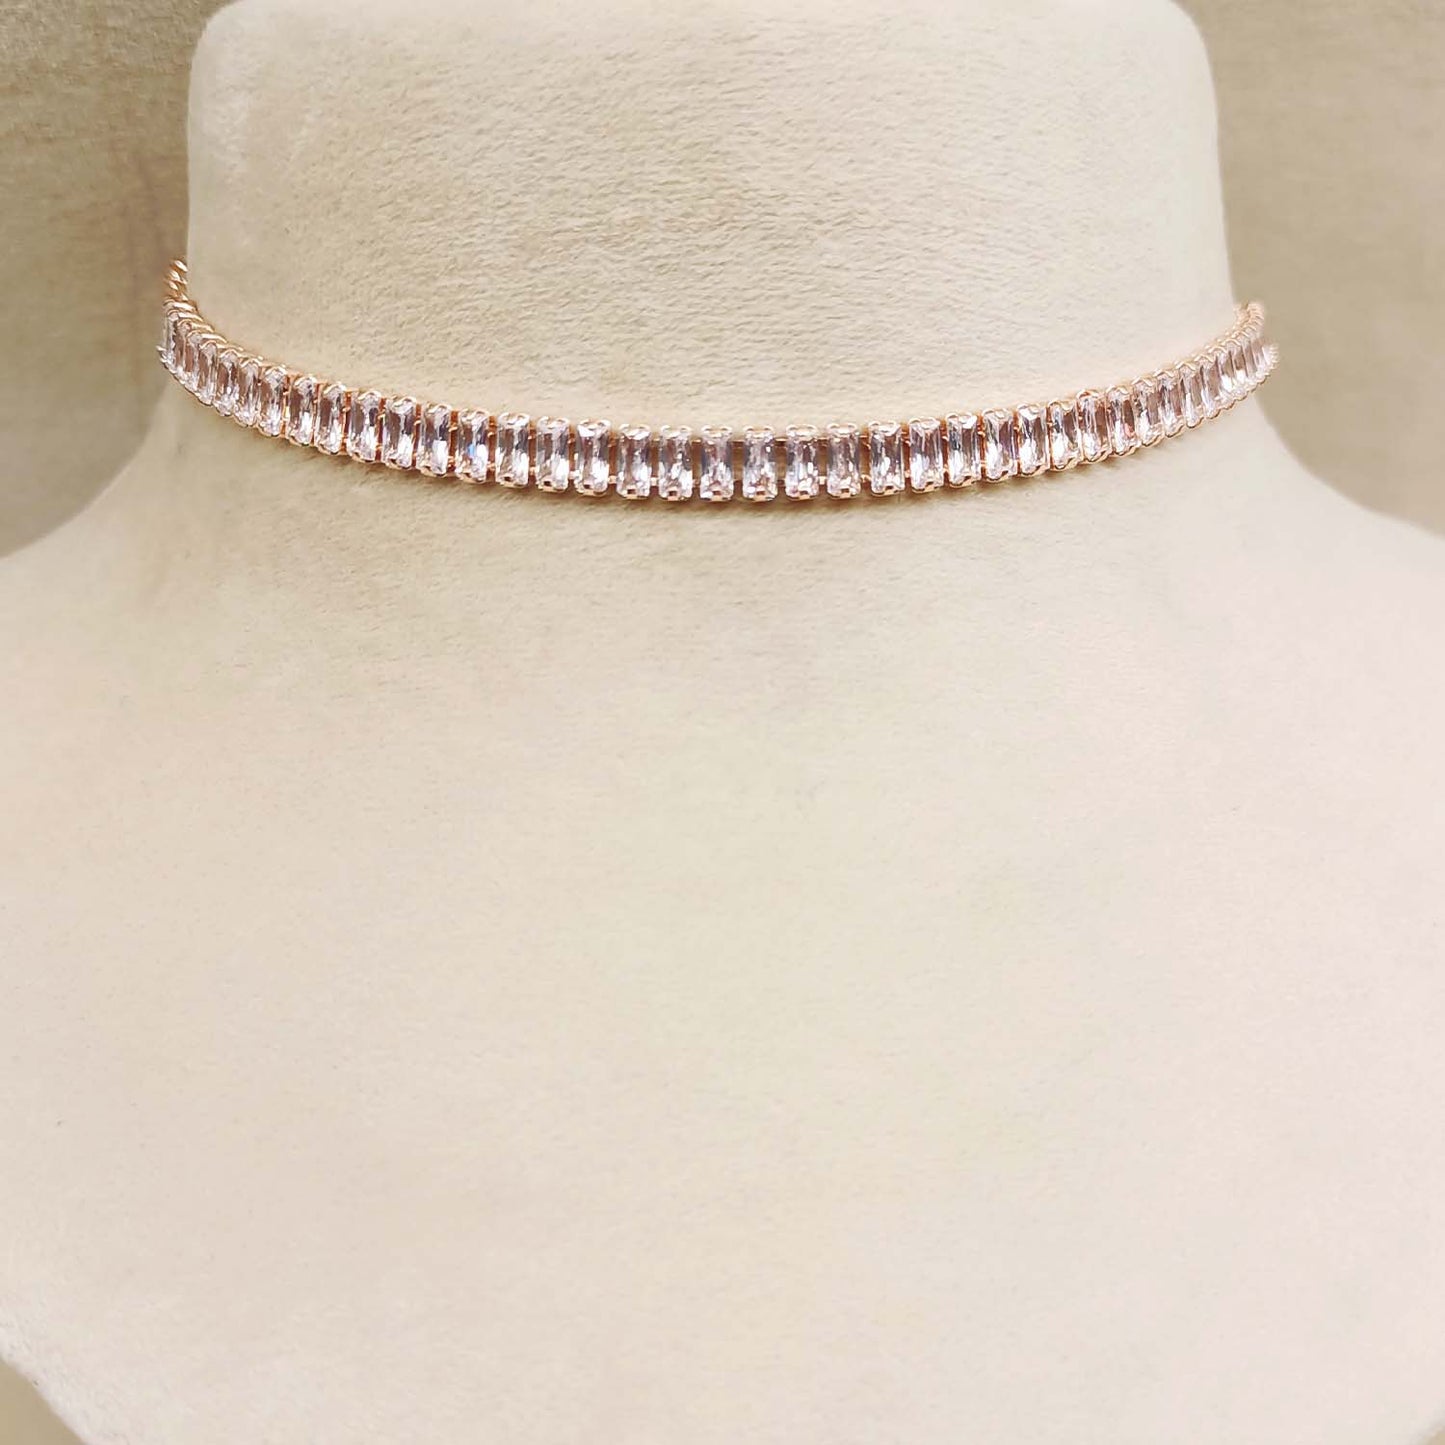 Reyhana Rose Plated American Diamond Necklace Set